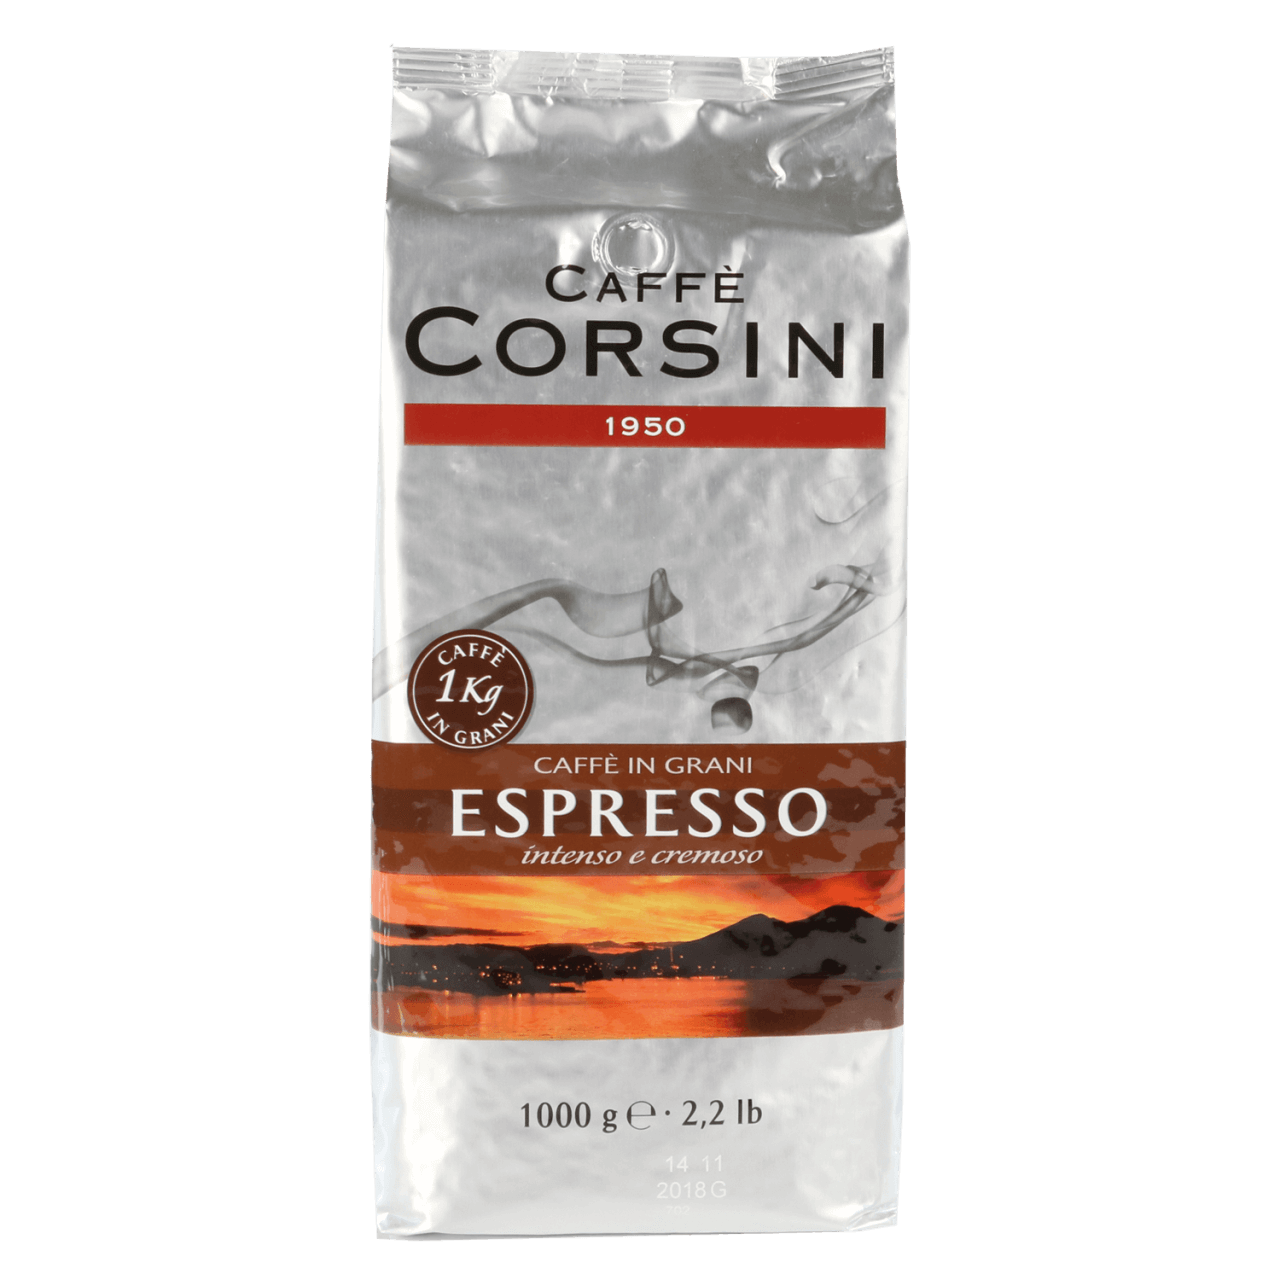 Corsini Espresso Kaffee Bohnen 1kg